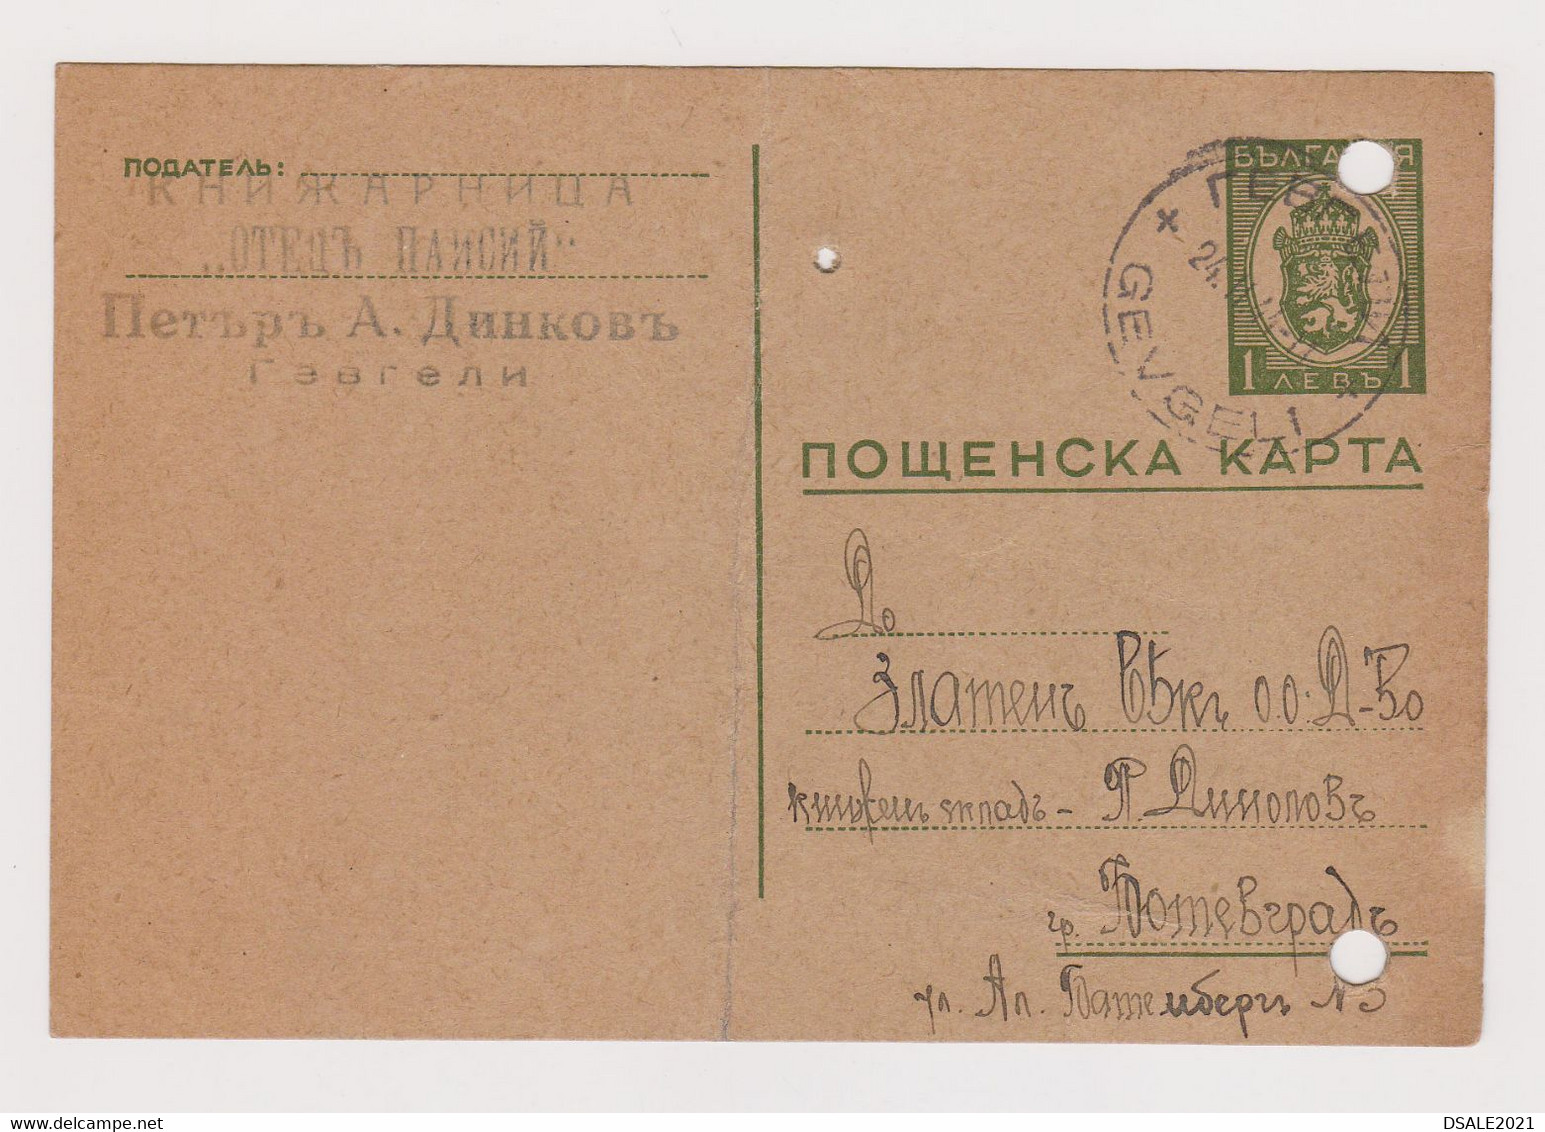 Bulgaria Bulgarie Bulgarije 1944-ww2 Entier Postal Stationery Card Bulgarian Office N. Macedonia GEVGELI Cachet (65954) - Oorlog